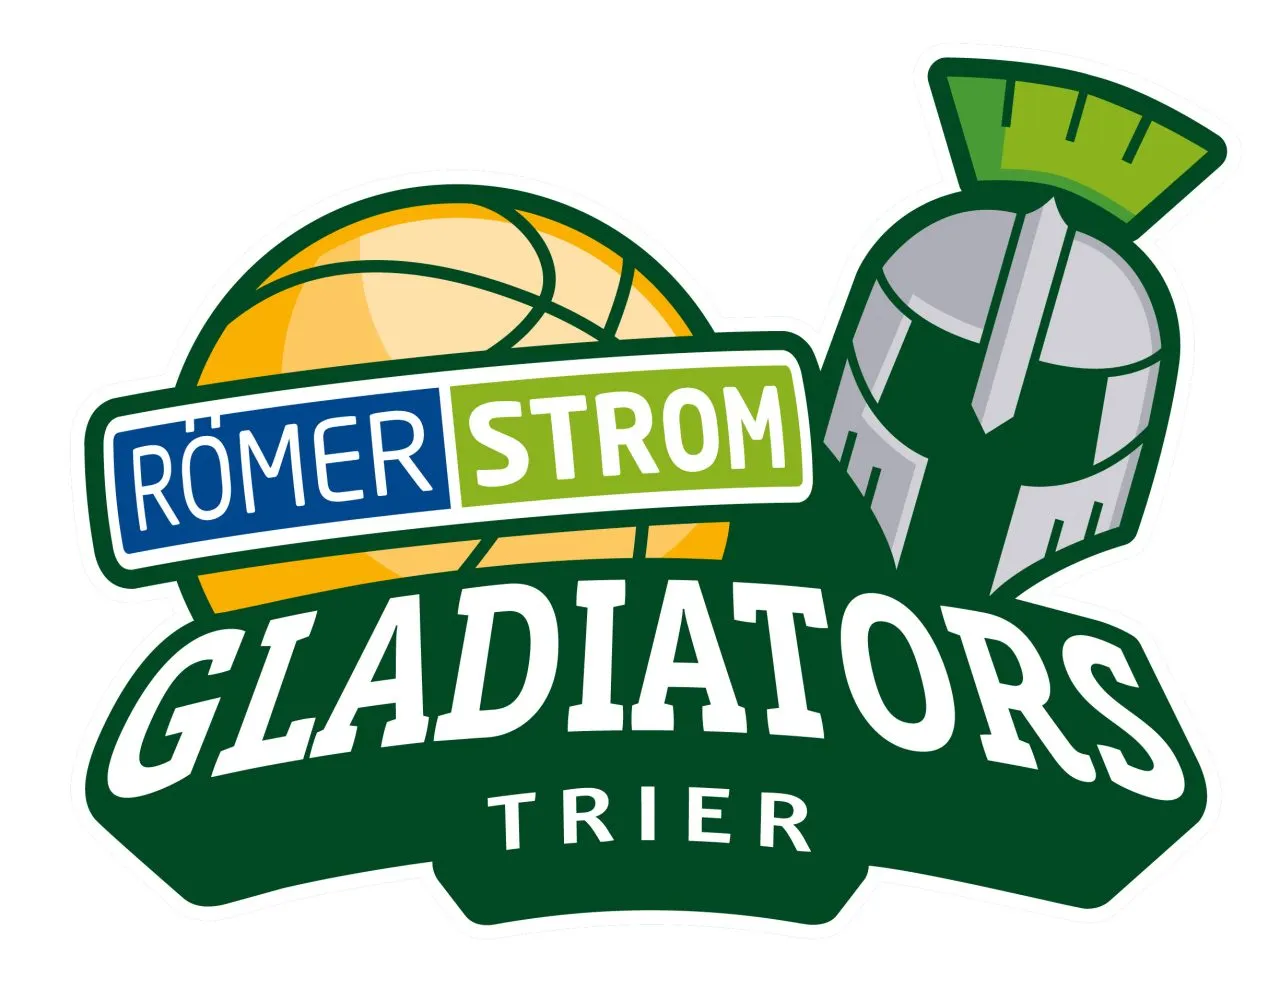 RÖMERSTROM-Gladiators-Trier-e1682515625110